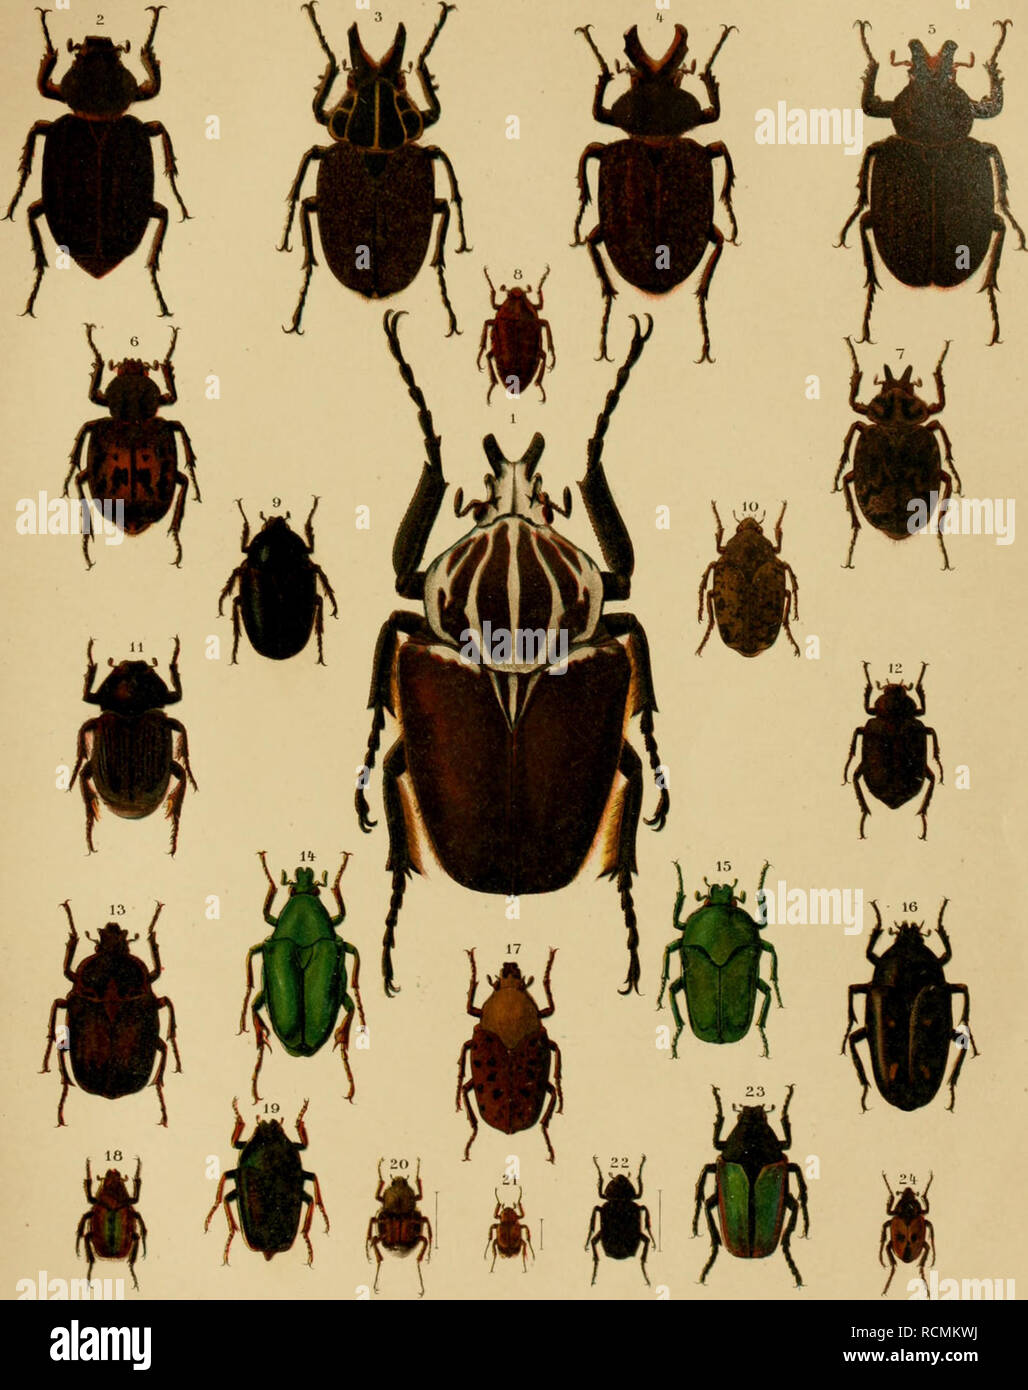 . Die exotischen Käfer in Wort und Bild. Beetles. Cetonini VI. Ineaini. Triehiini. Valgini. 2 Ibis.. 1. Ooliathus giganteus. 2. lnca pulverulentus 9- 3. I. clathratus &lt;$. 4. I. besckii $. 5. I. burmeisteri g. 6. I. irroratus $• 7. I. bon- plandi rj. 8. Macroma cognata. 9. Diplognatha silicea. 10. Pseudinca admixlus. 11. Platygenia barbata. 12. Osmoderma scabra. 13. Bothrorrhina reflexa {. 14. Pseudochalcothea auripes. 15. Ischiopsopha Iucivorax. 16. Clerota budda. 17. Conradtia principalis. 18. Stegopterus suturalis. 19. Mycterophallus dichropus. 20. Trichius piger. 21. Comythovalgus fascic Stock Photo